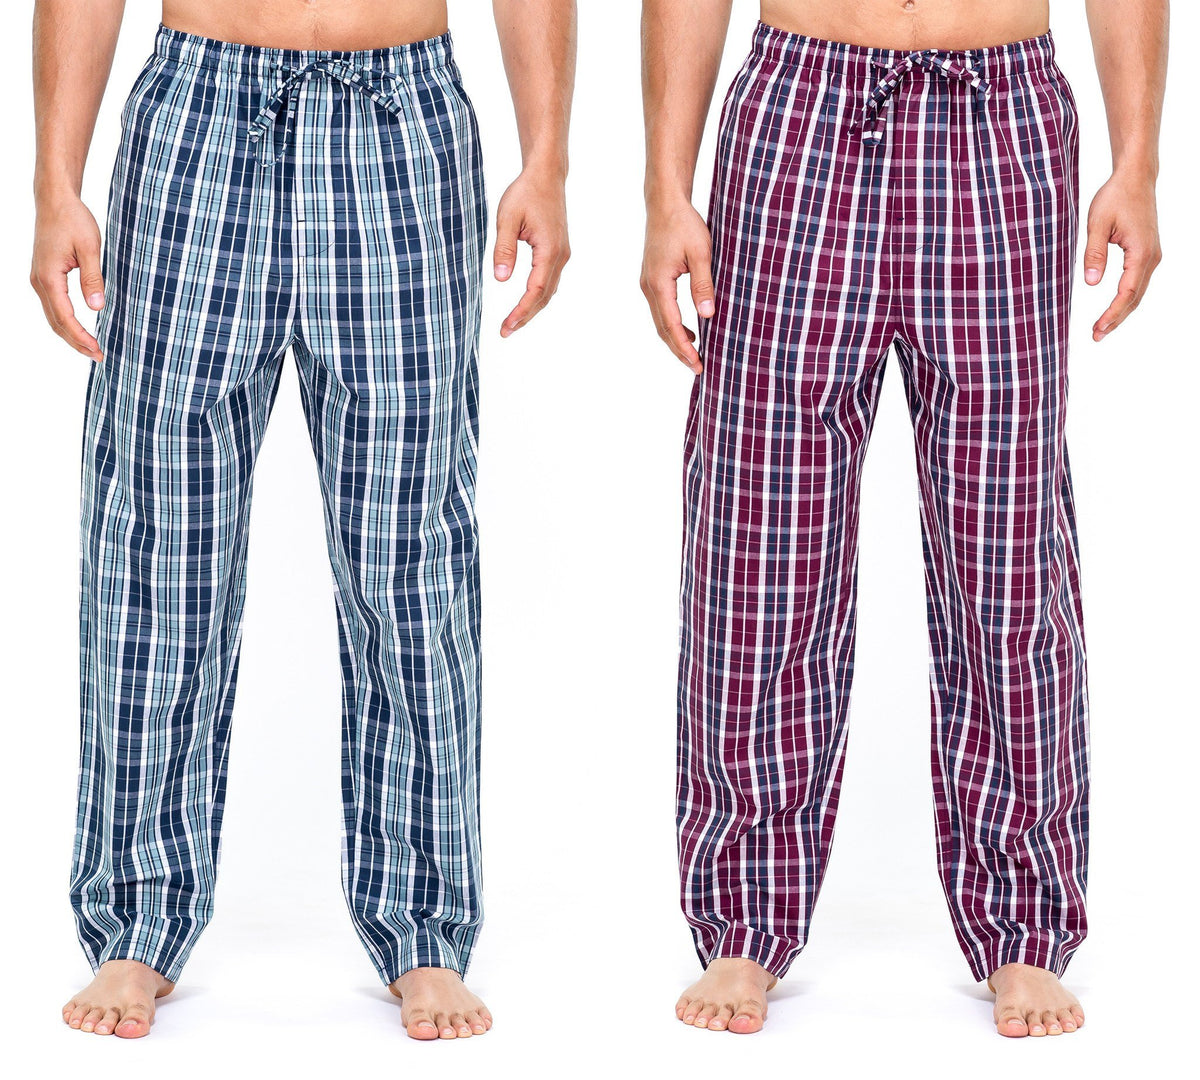 Men's Premium Cotton Lounge/Sleep Pants - 2 Pack - 2-Pack (Navy/Blue - Burgundy/Navy Plaid)